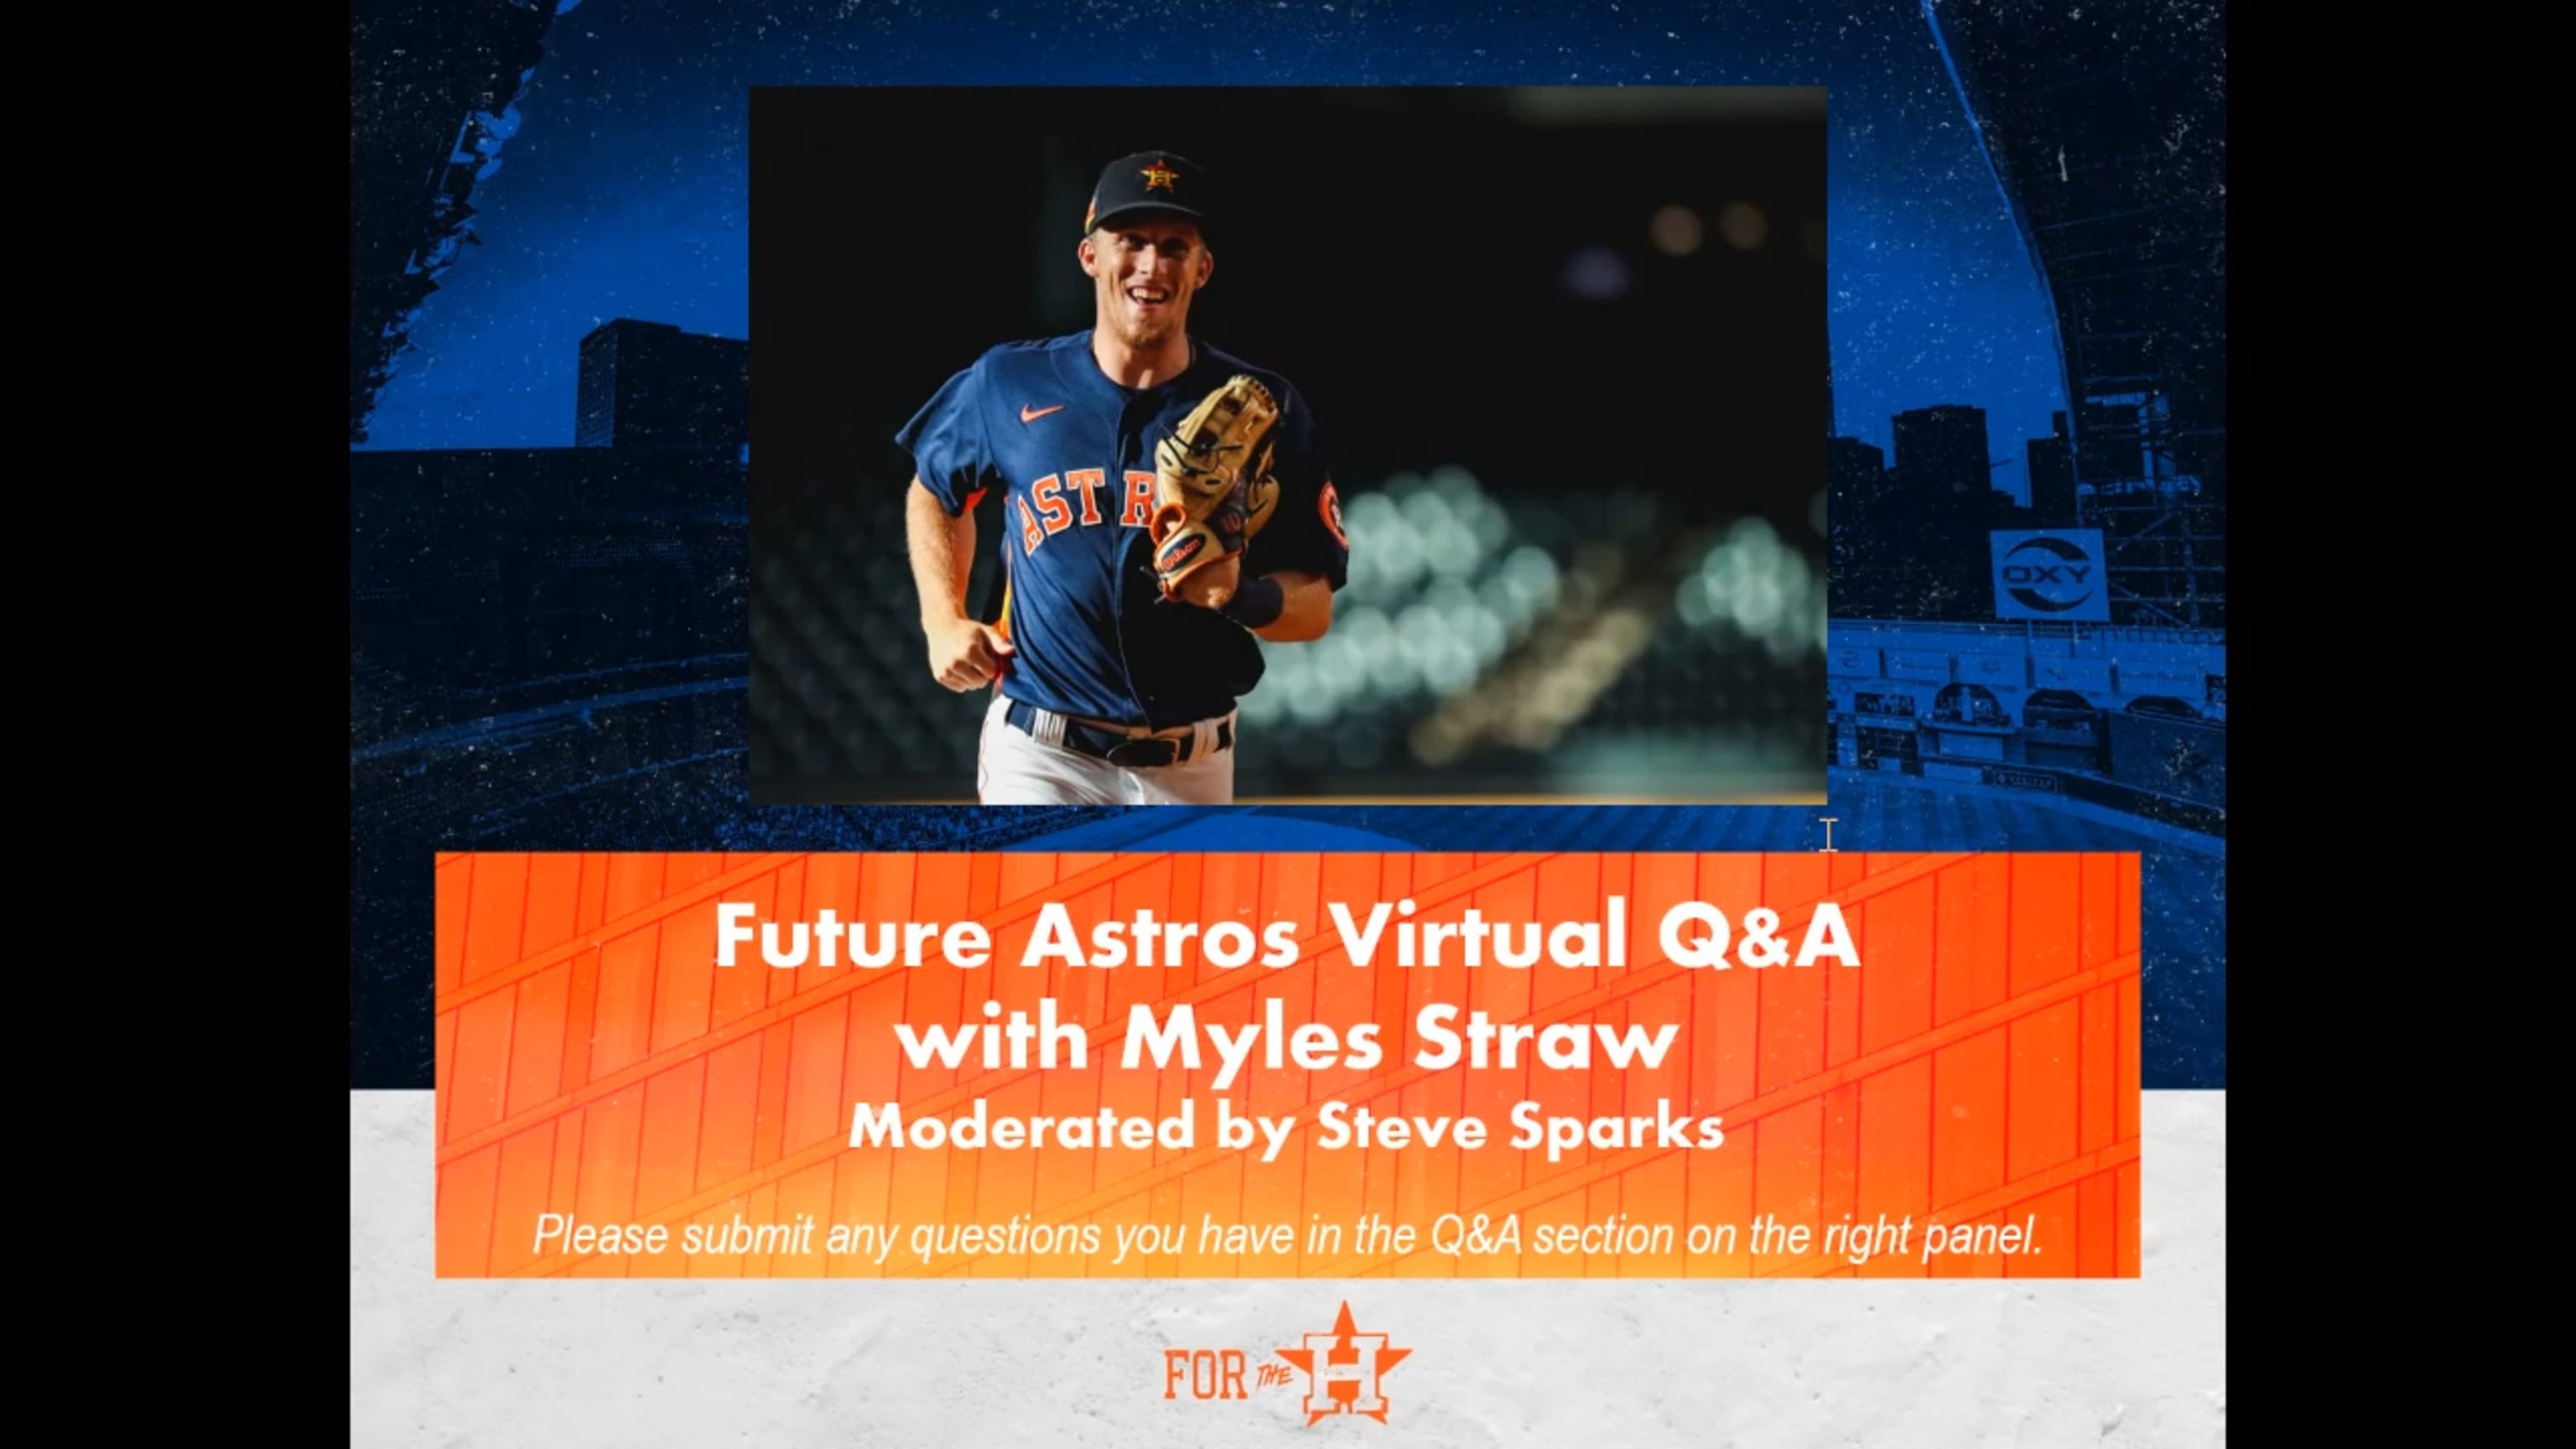 The Future Astros Program